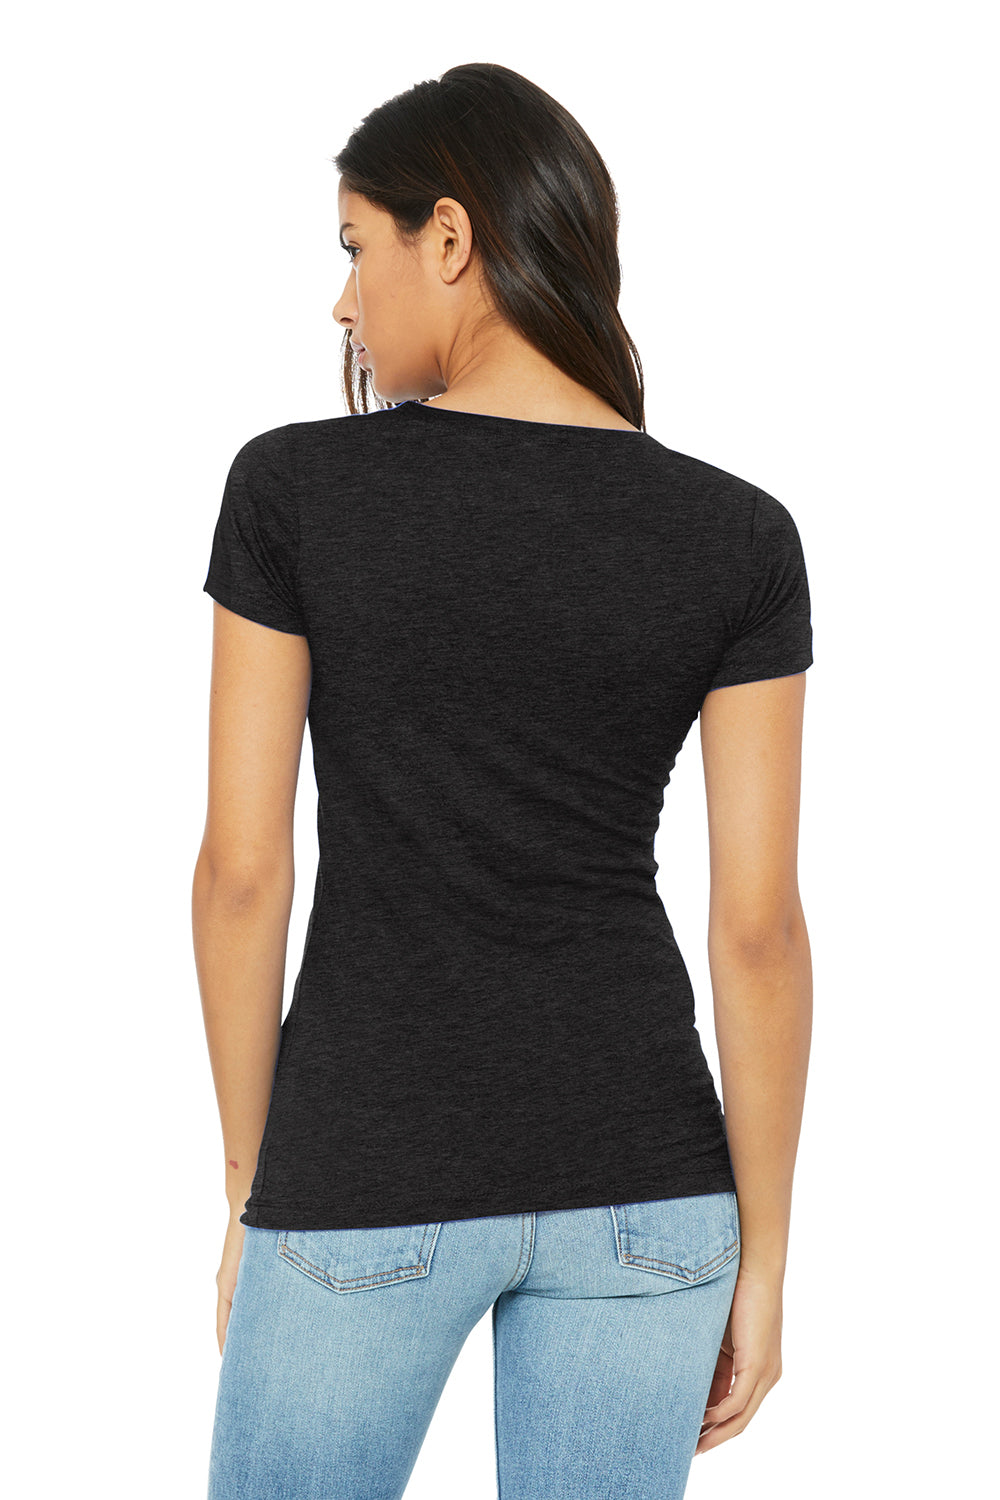 Bella + Canvas BC6004/6004 Womens The Favorite Short Sleeve Crewneck T-Shirt Heather Black Model Back